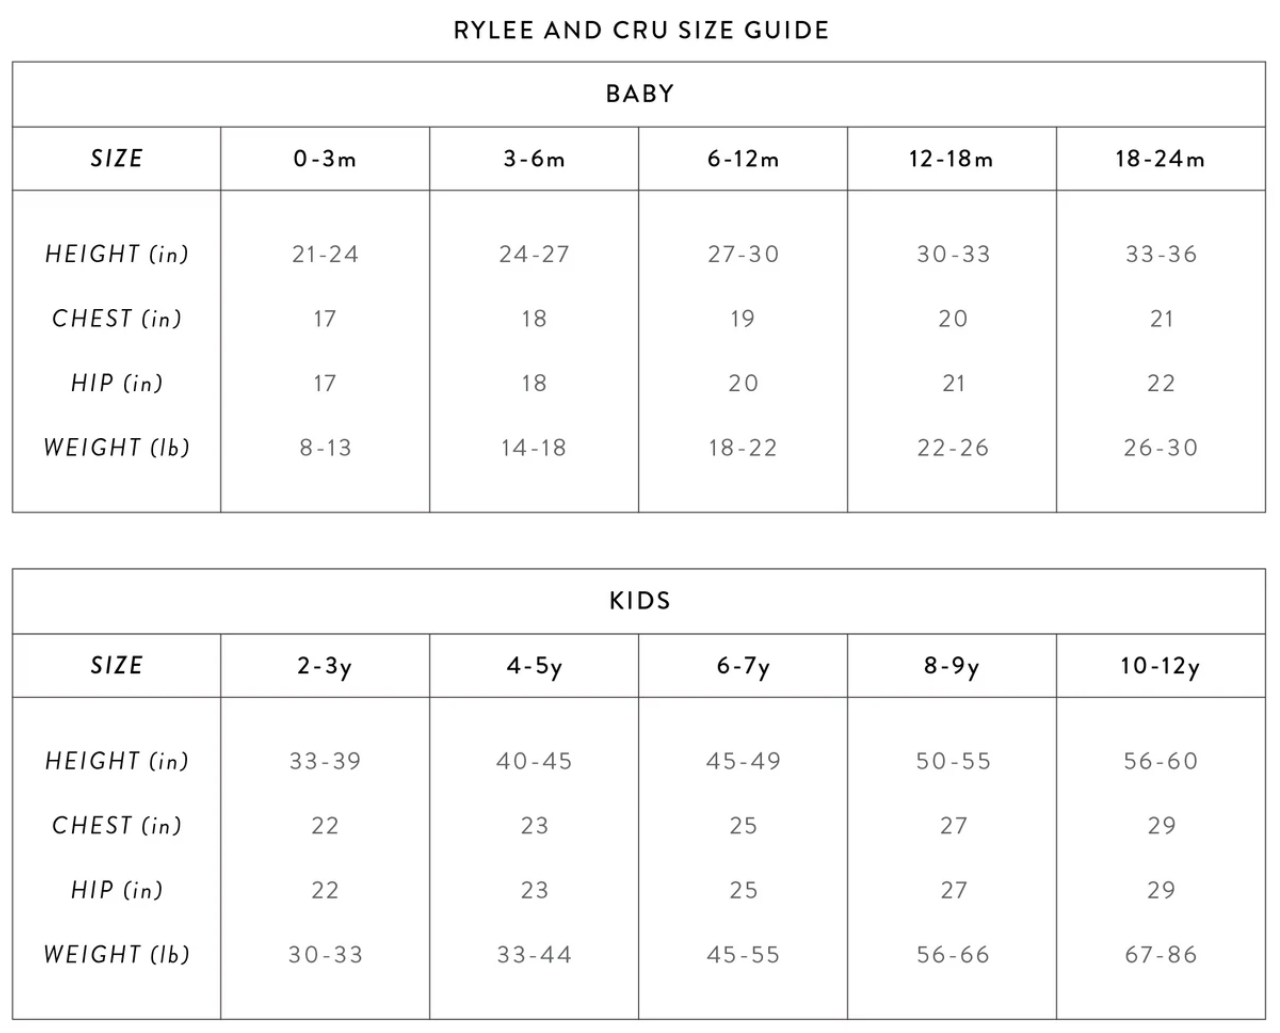 Rylee + Cru size guide